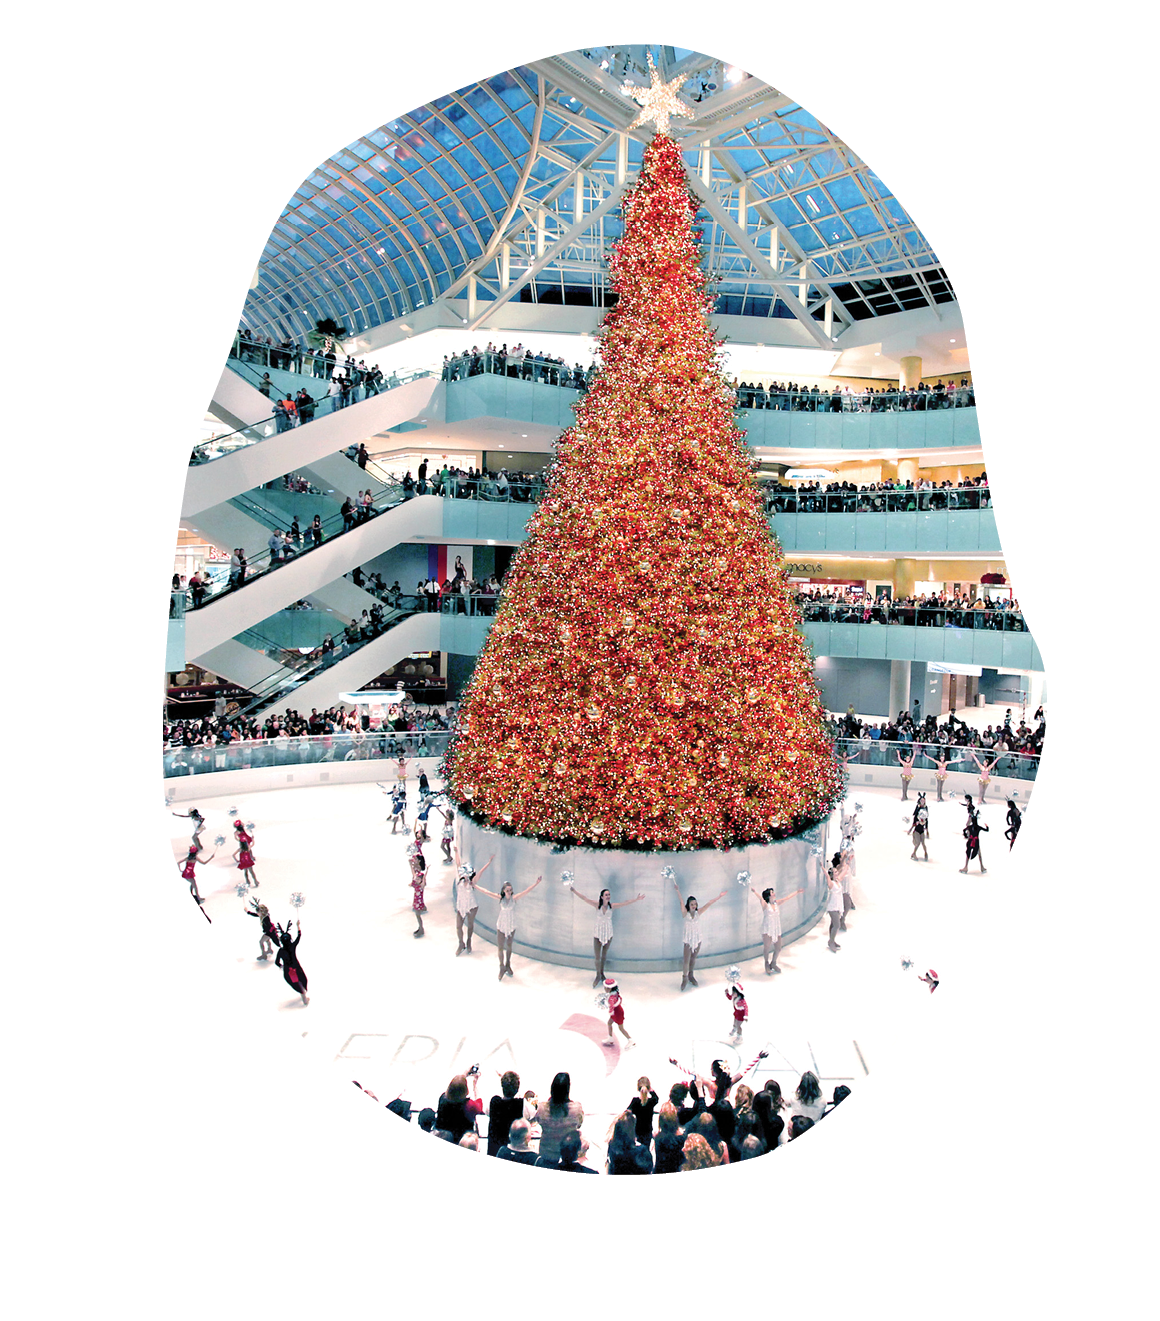 The Galleria Dallas at Christmas  Holidays around the world, Galleria, Galleria  mall